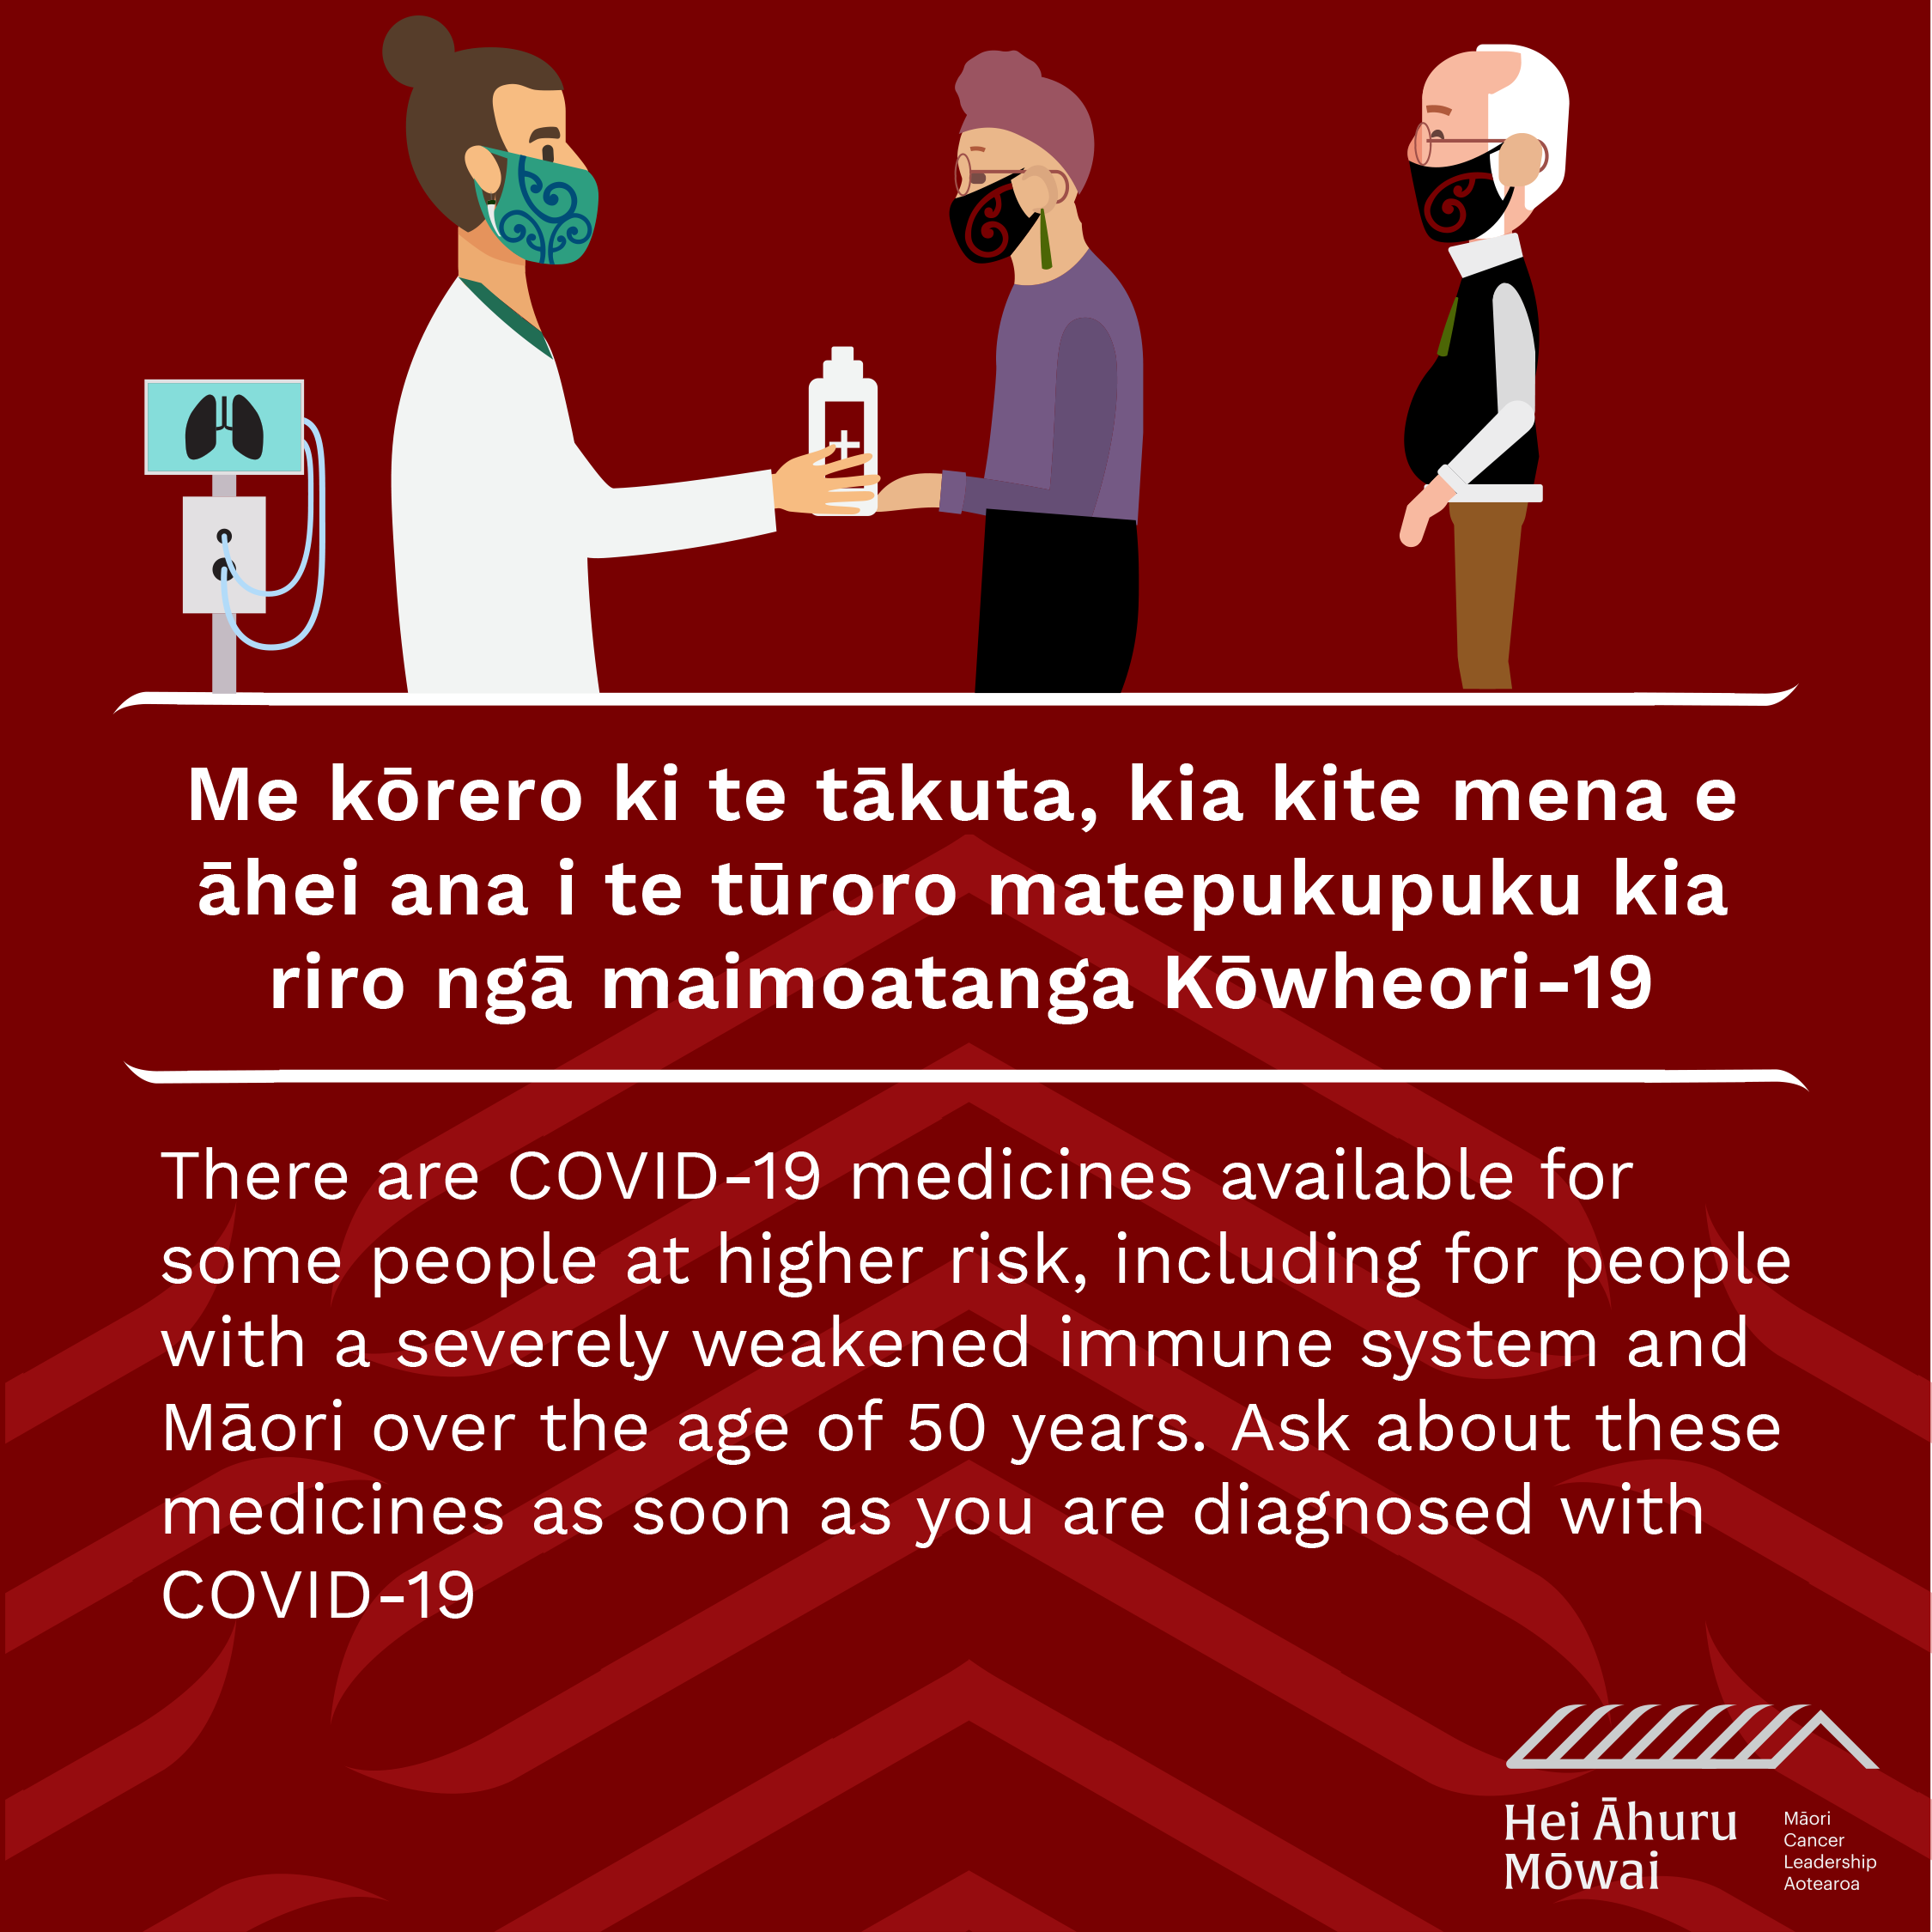 Covid_19_medicines_for_higher_risks_77f0a6a6bd.png